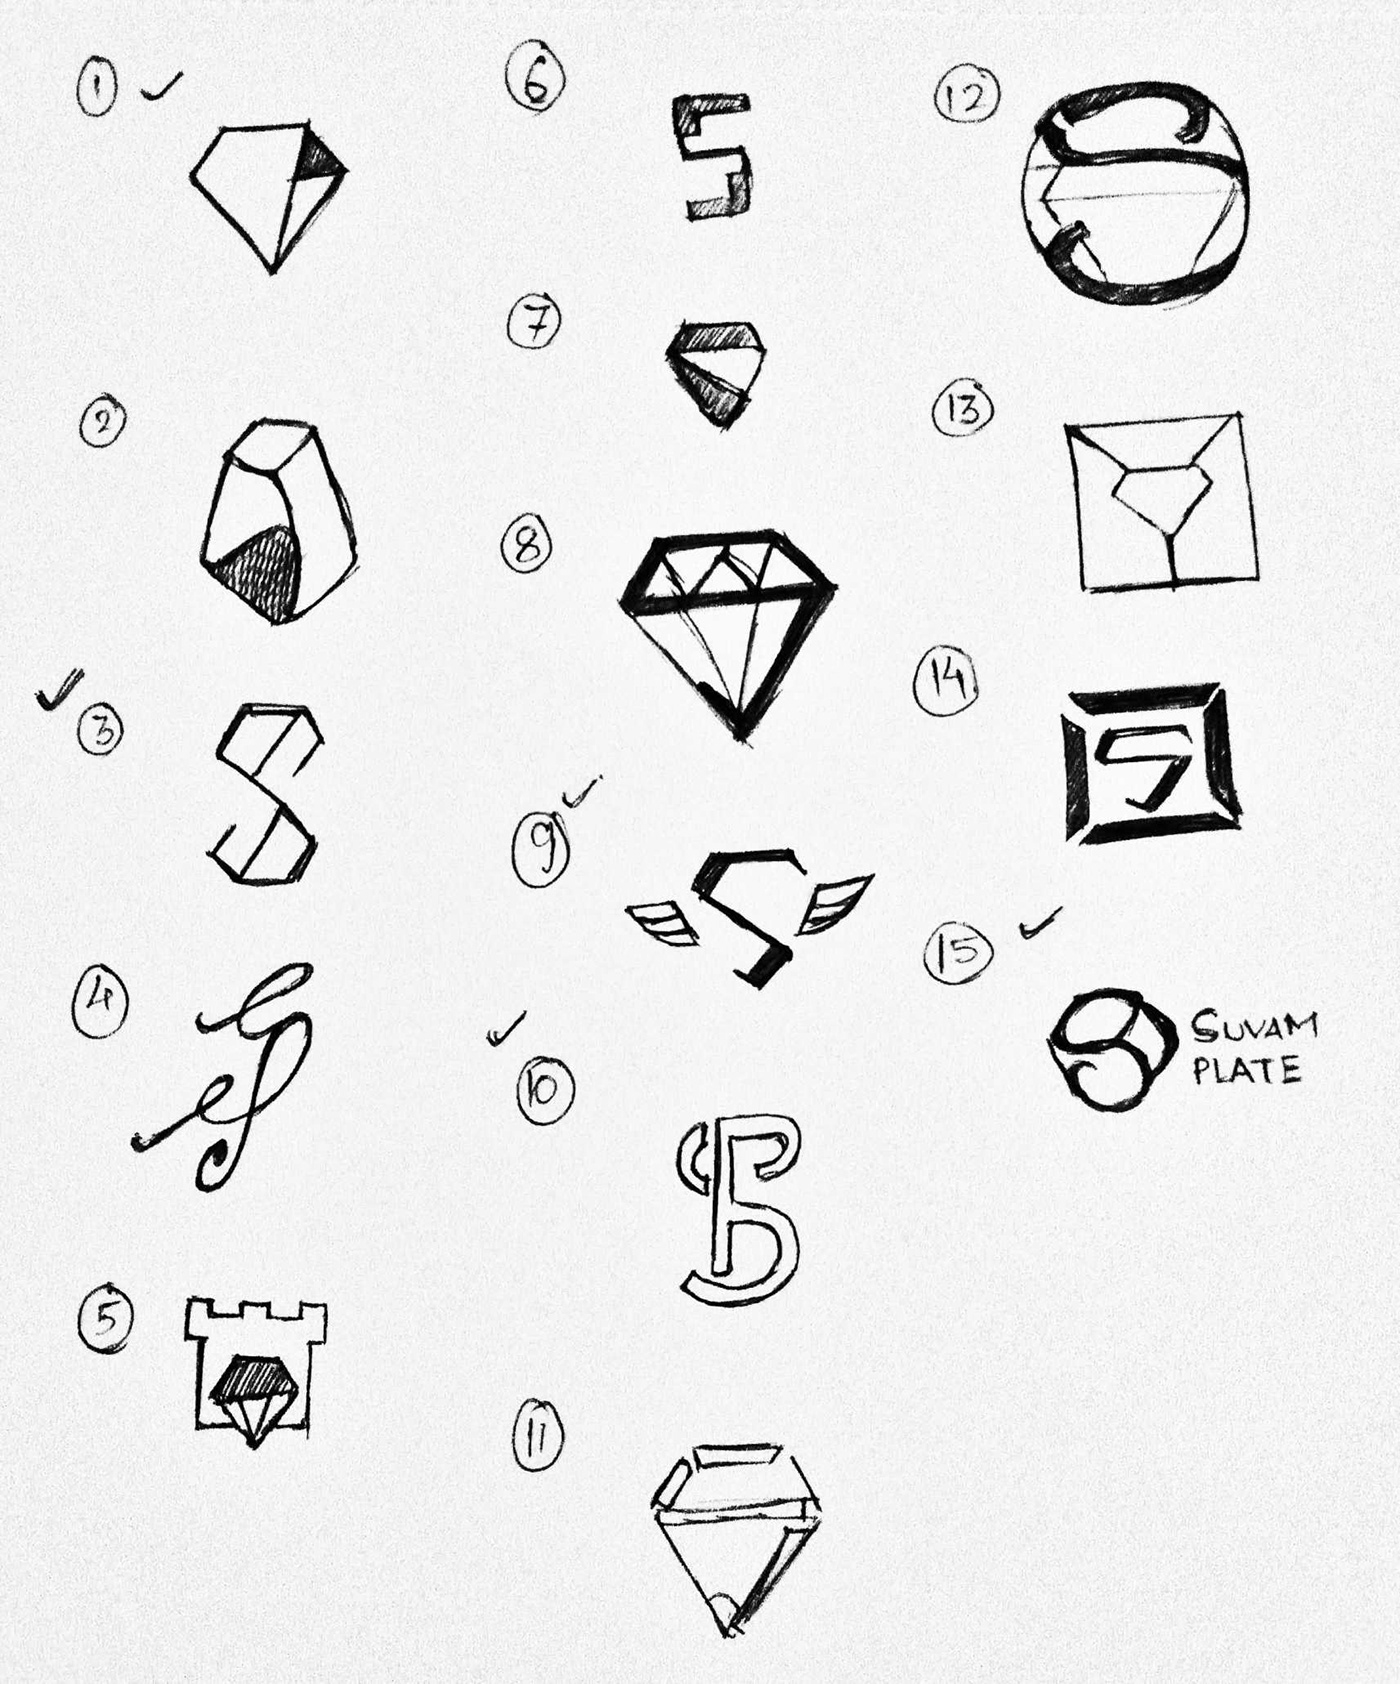 brainstroming logo design sketchs